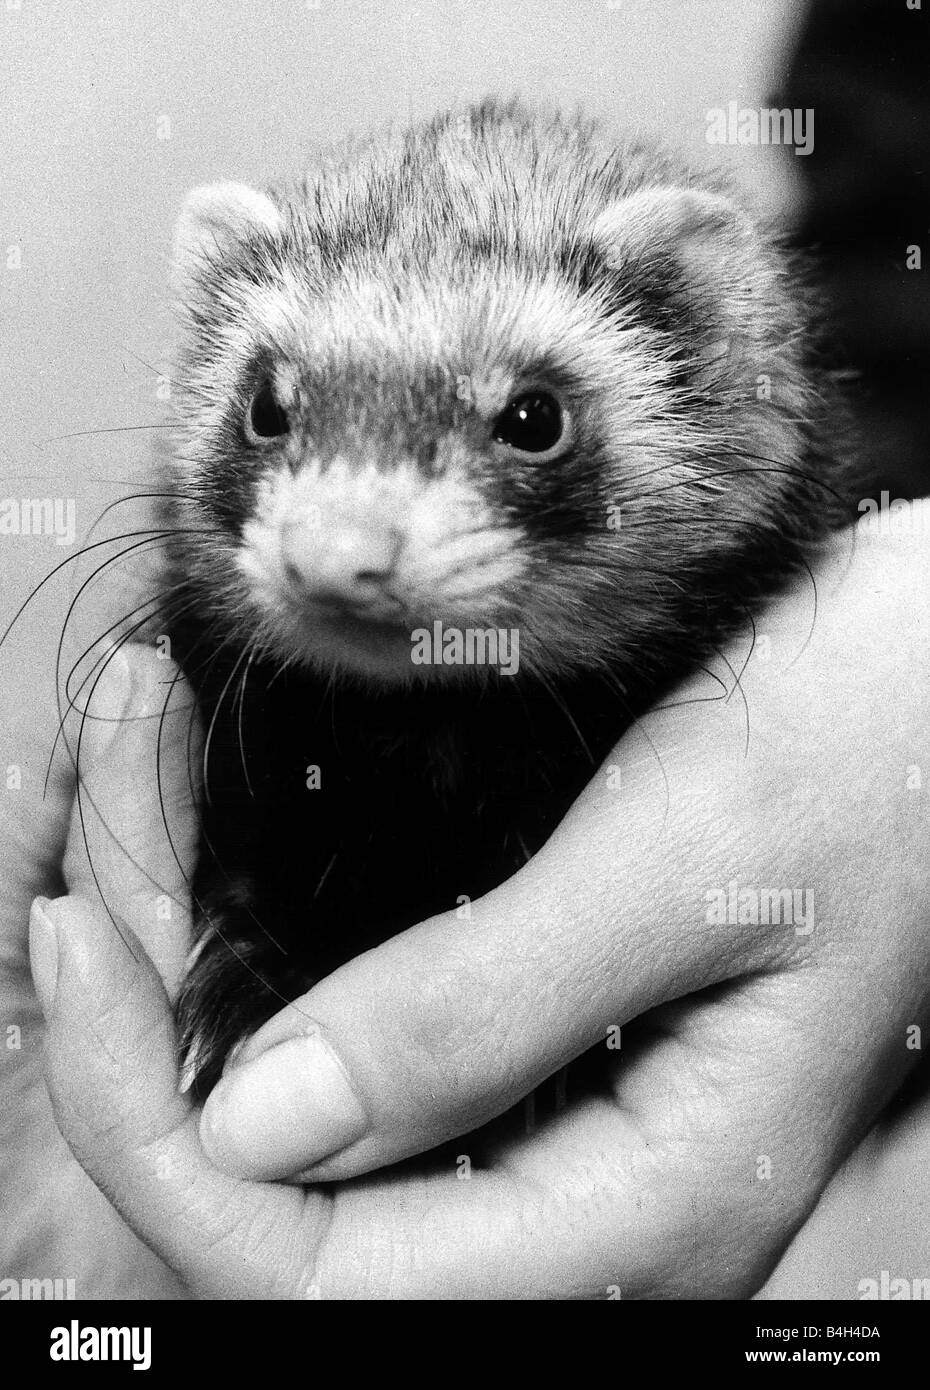 White ferret Black and White Stock Photos & Images - Alamy